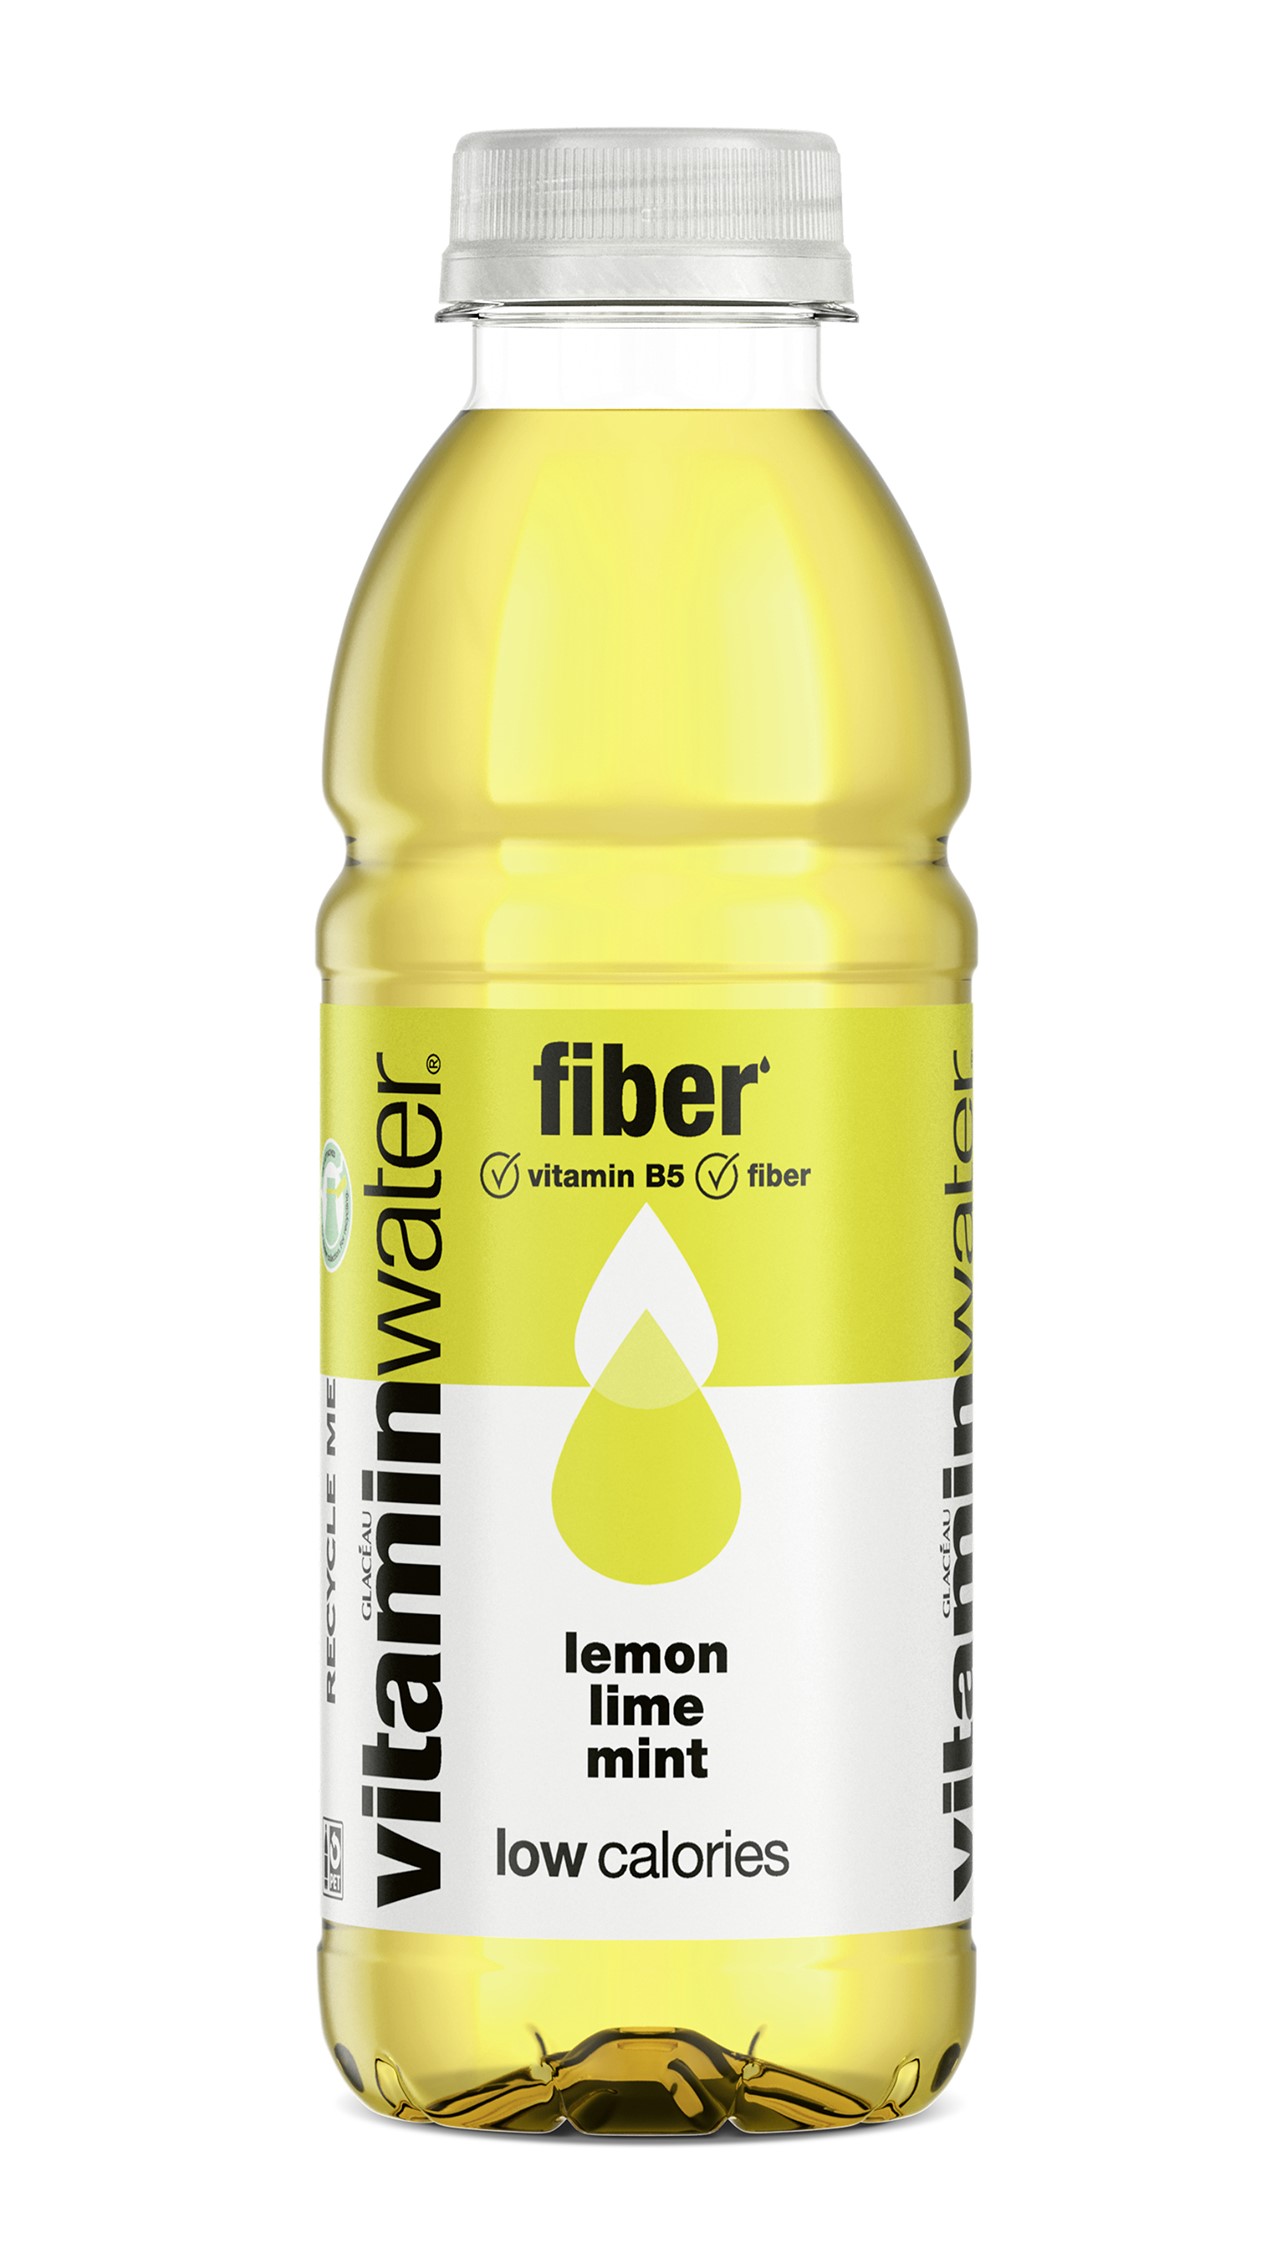 bouteille de vitaminwater fiber